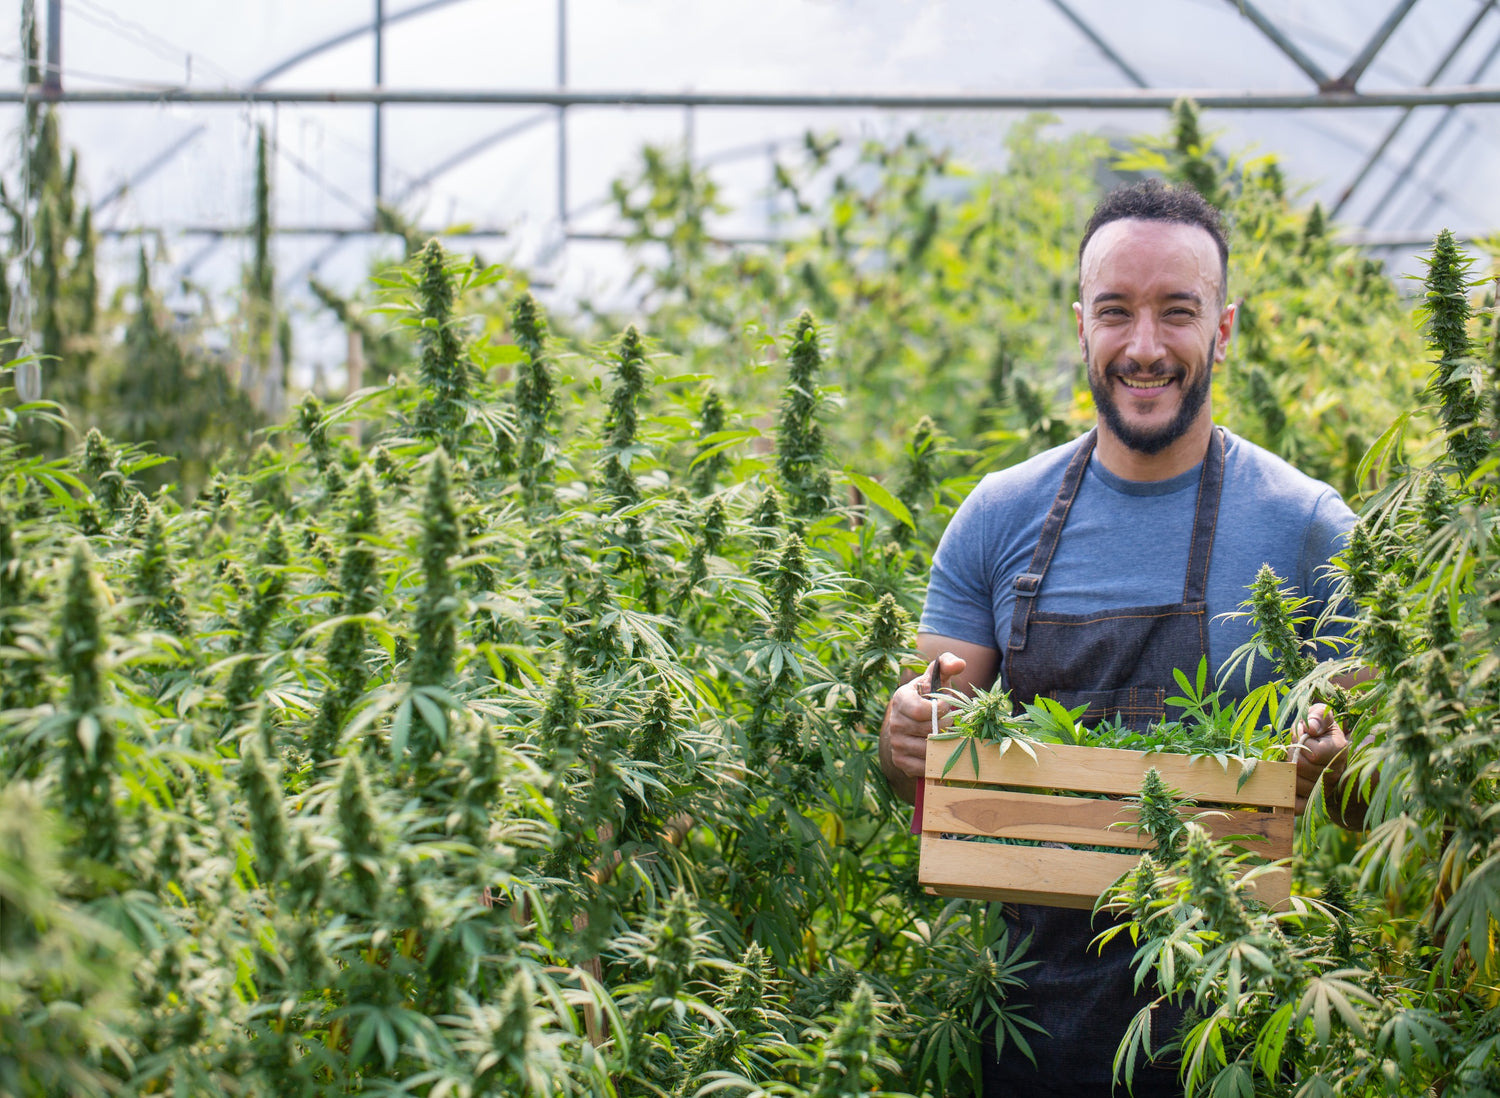 weighing marijuana buds on a scale. Fresh cannabis harvest Stock